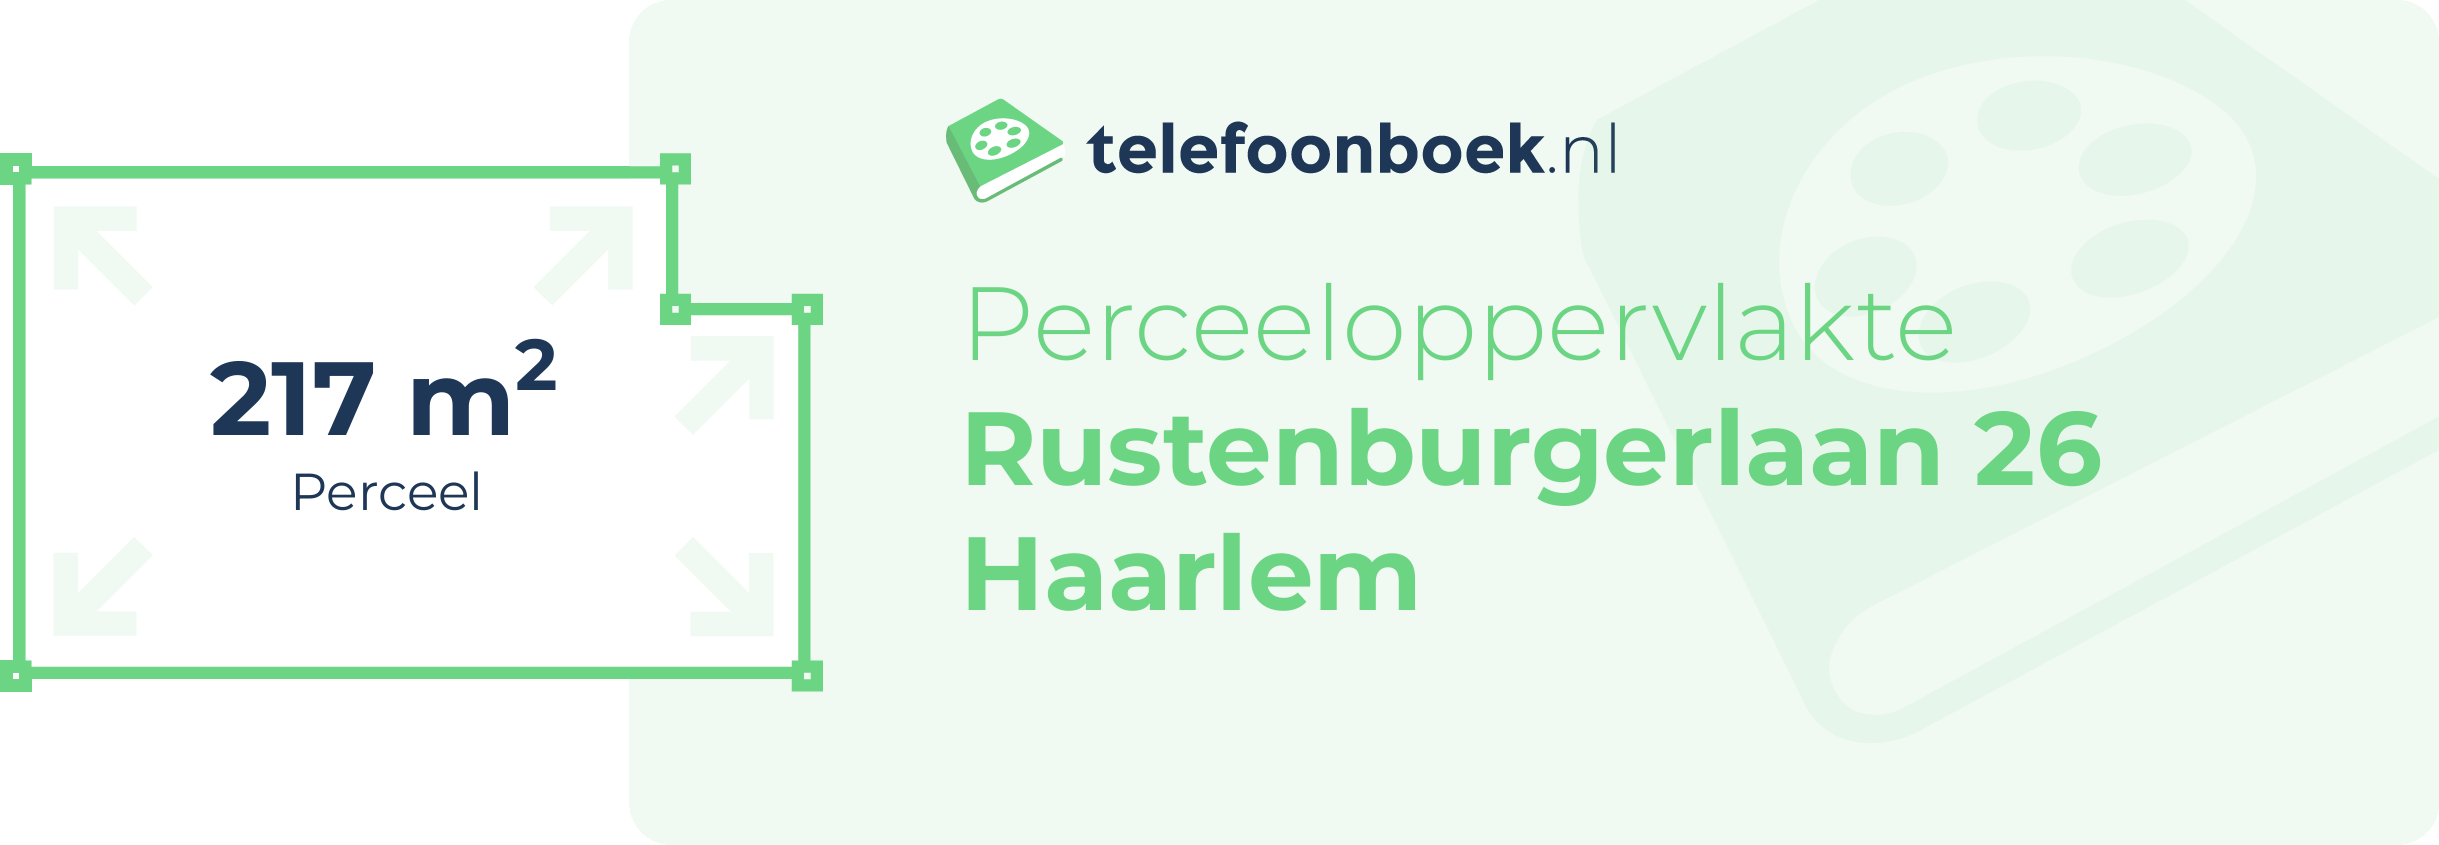 Perceeloppervlakte Rustenburgerlaan 26 Haarlem